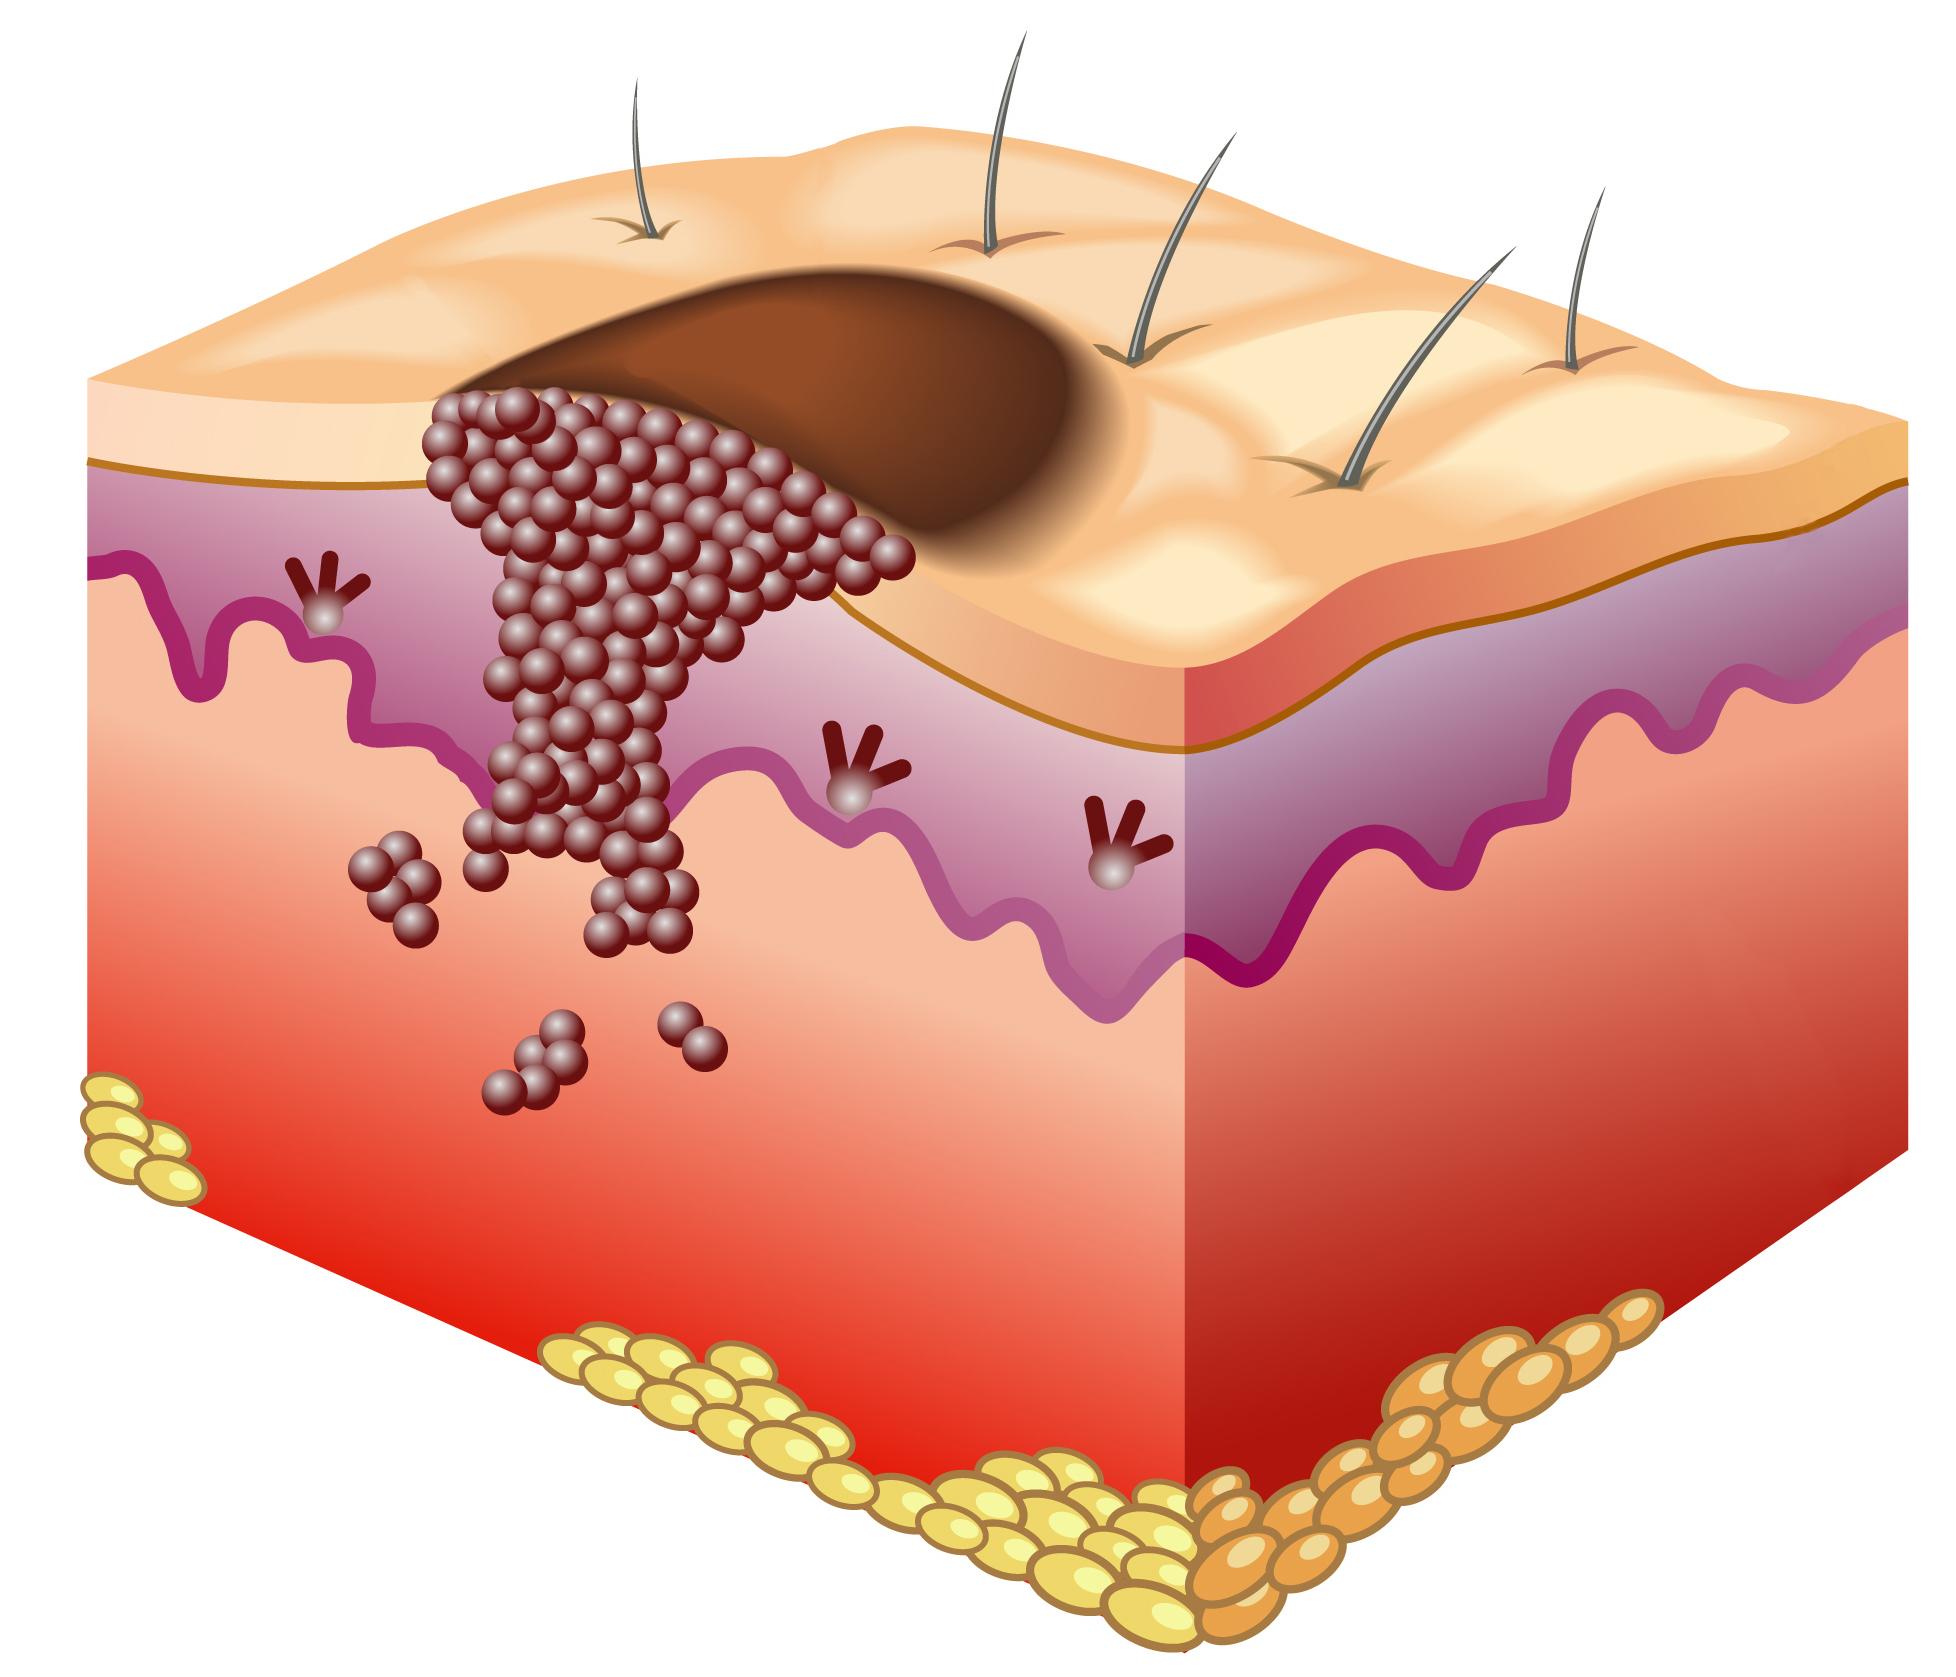 Skin with melanoma diagram